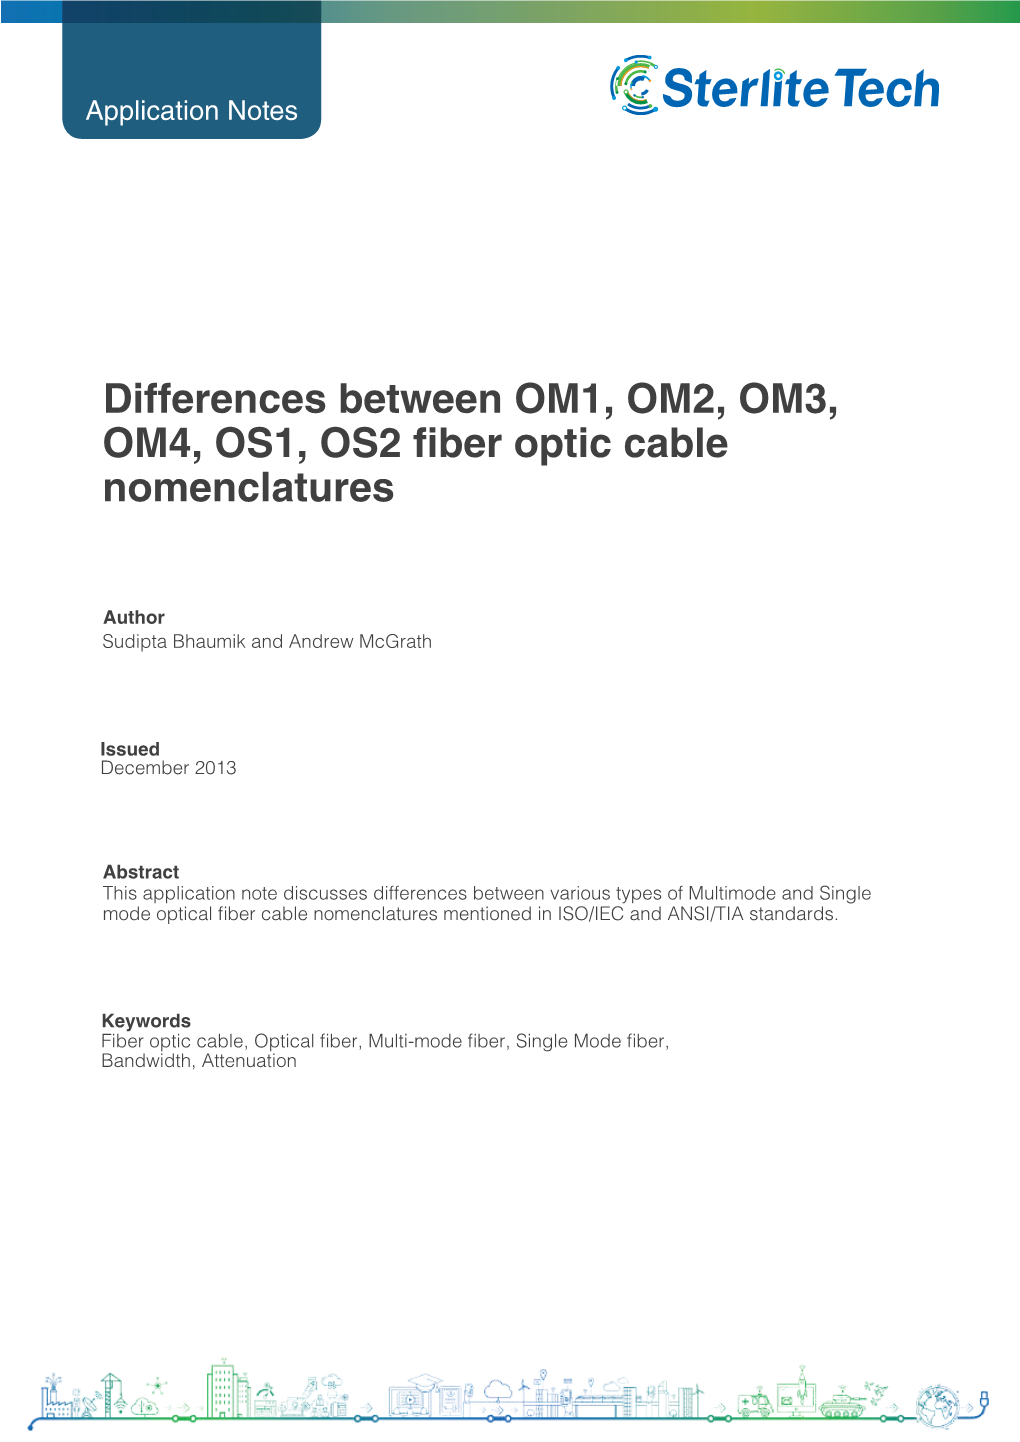 Differences Between OM1, OM2, OM3, OM4, OS1, OS2 Fibre Optic